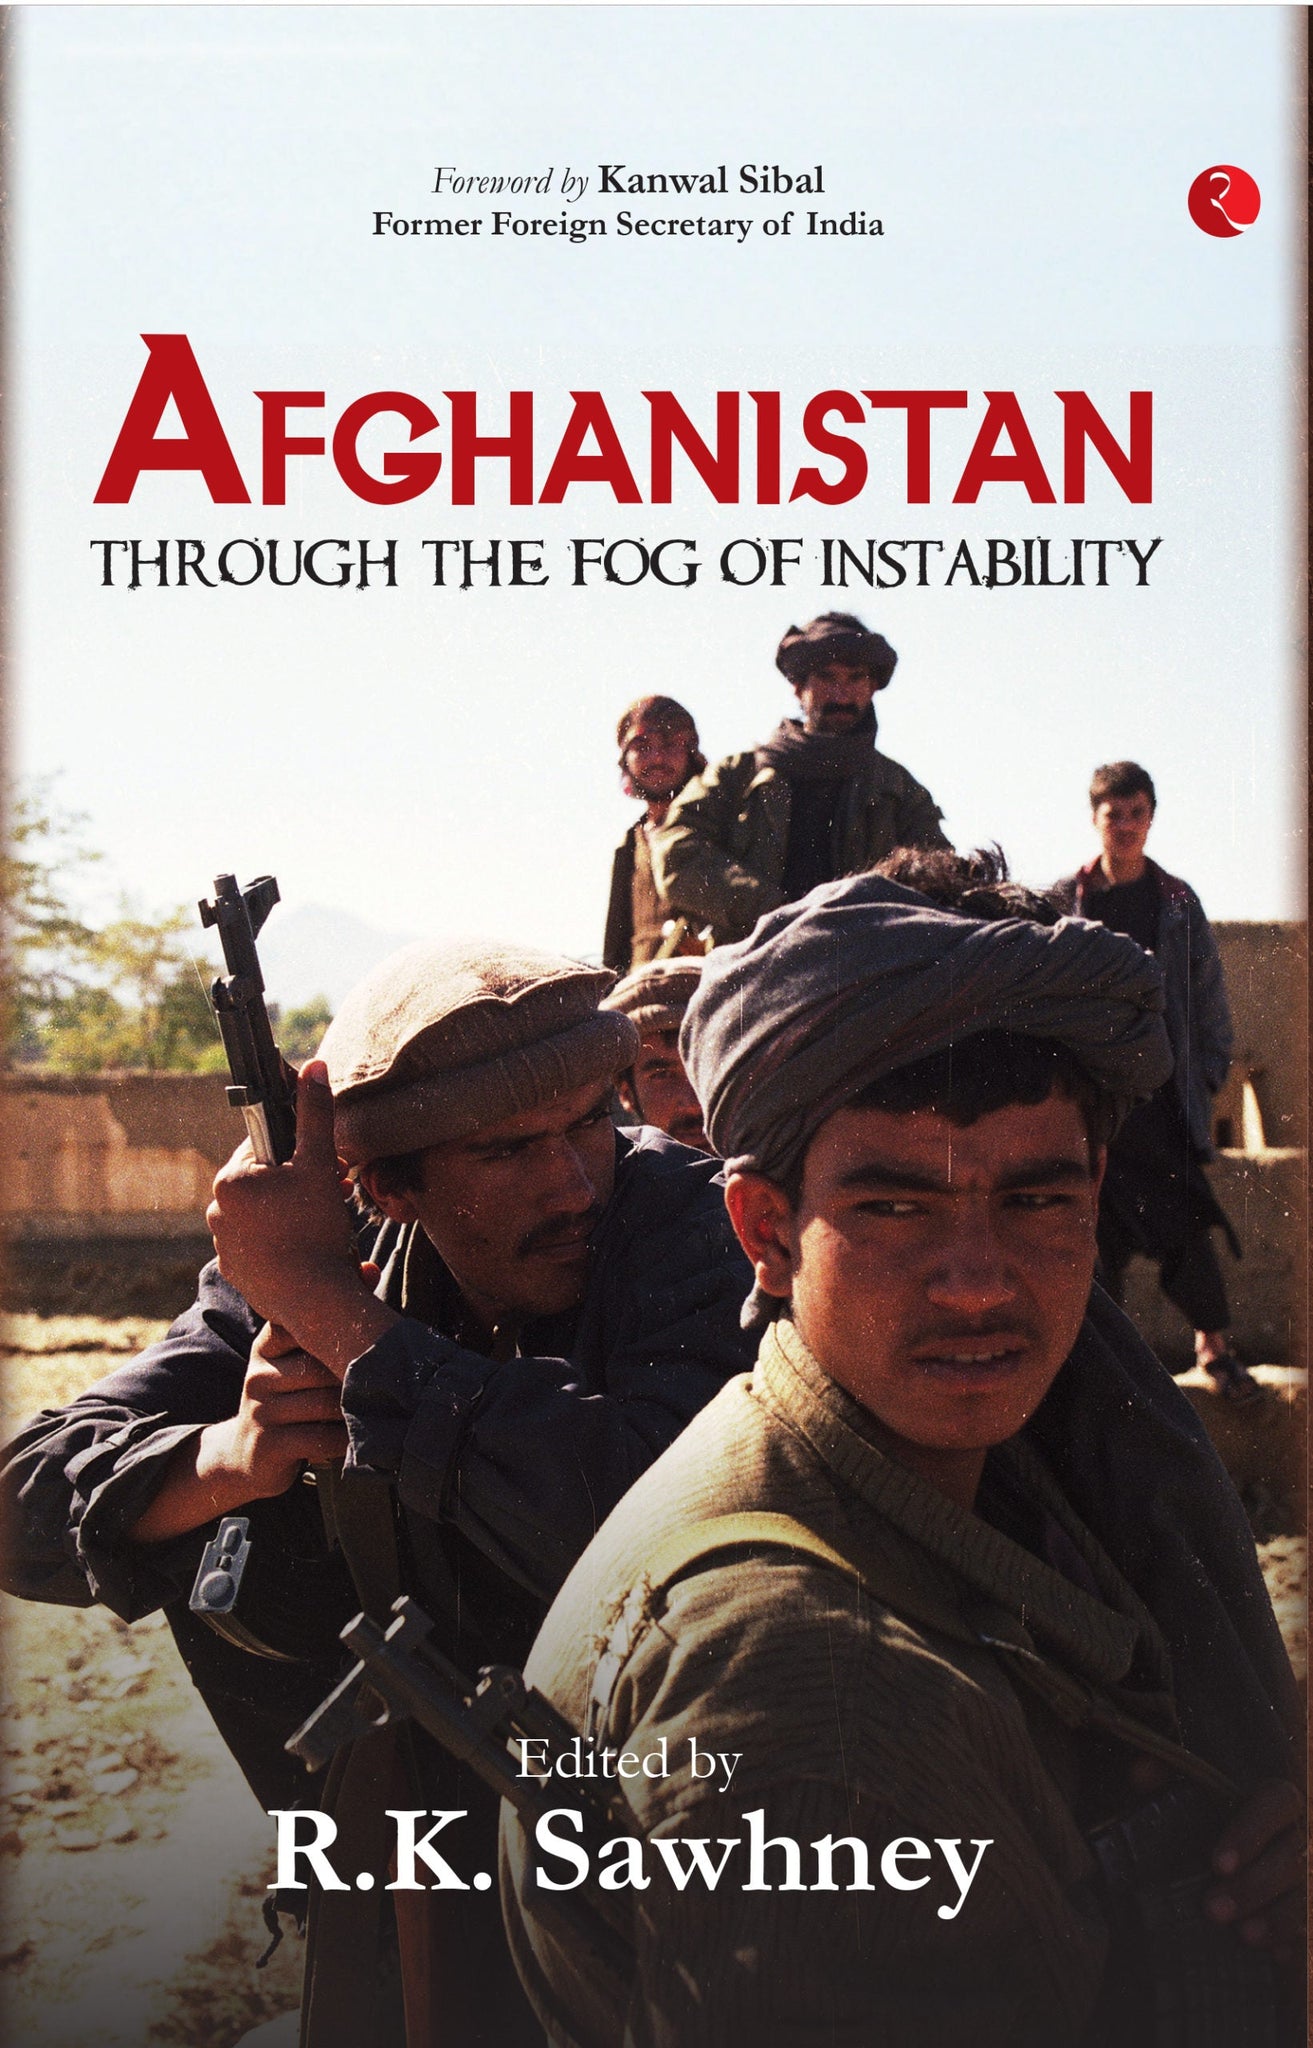 AFGHANISTAN: THROUGH THE FOG OF INSTABILITY